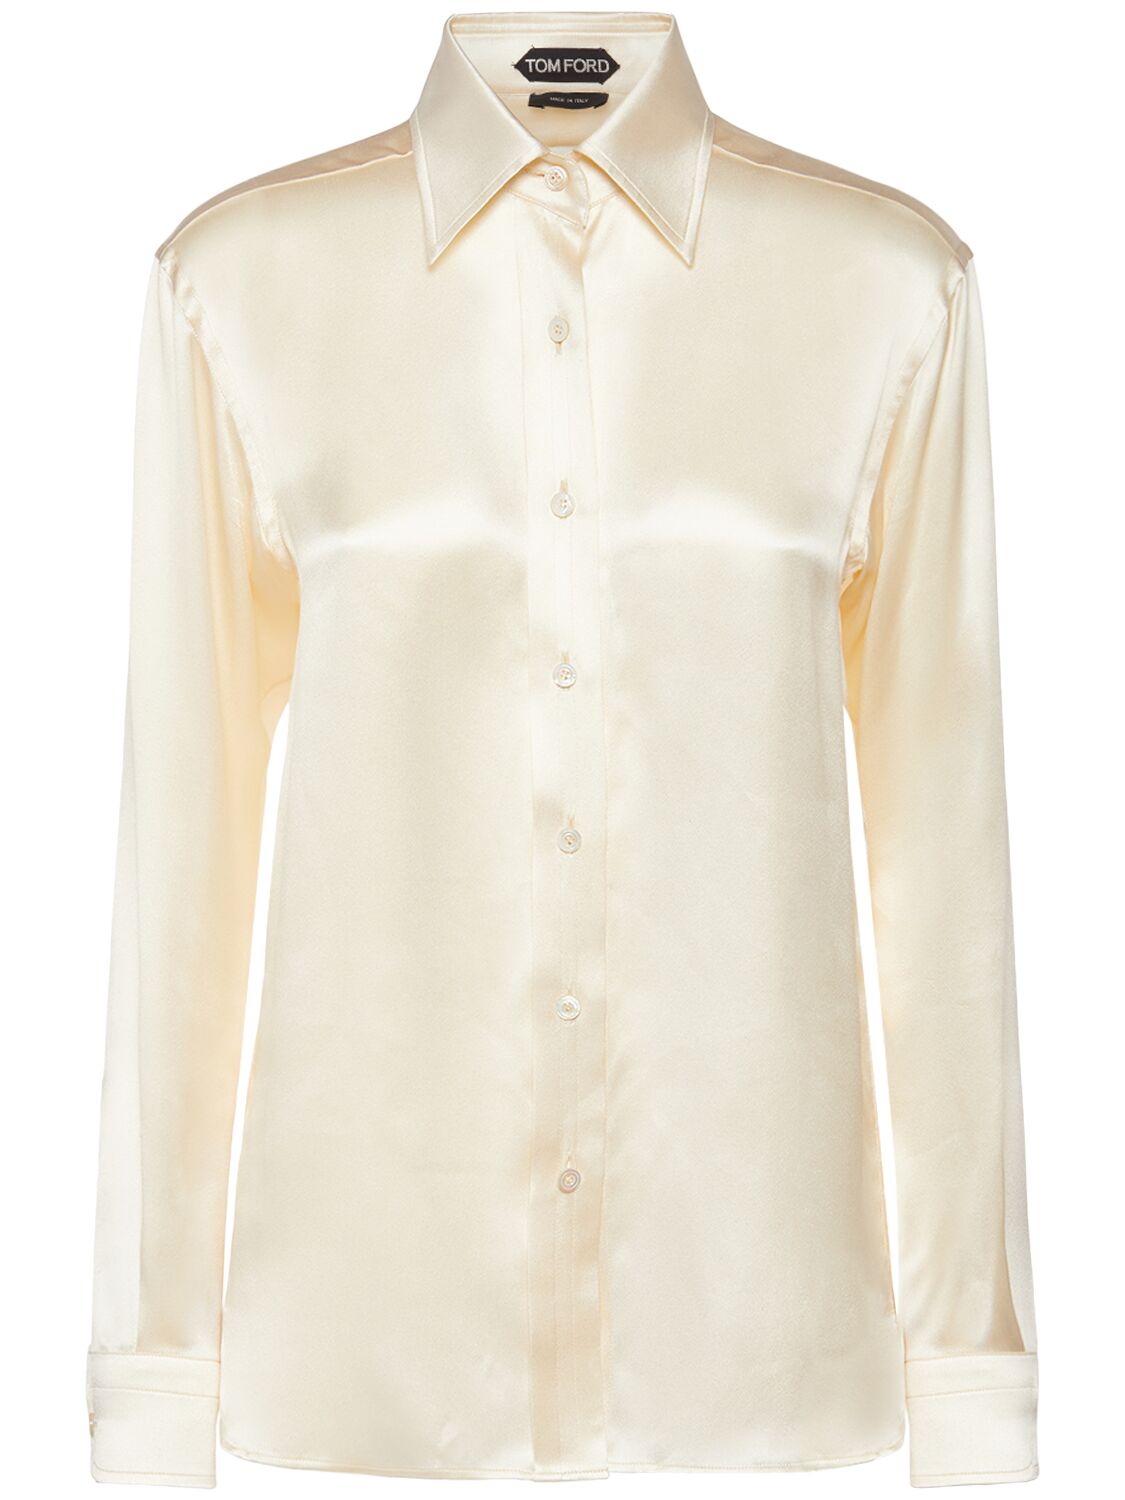 Tom Ford Fluid Silk Charmeuse Shirt In White